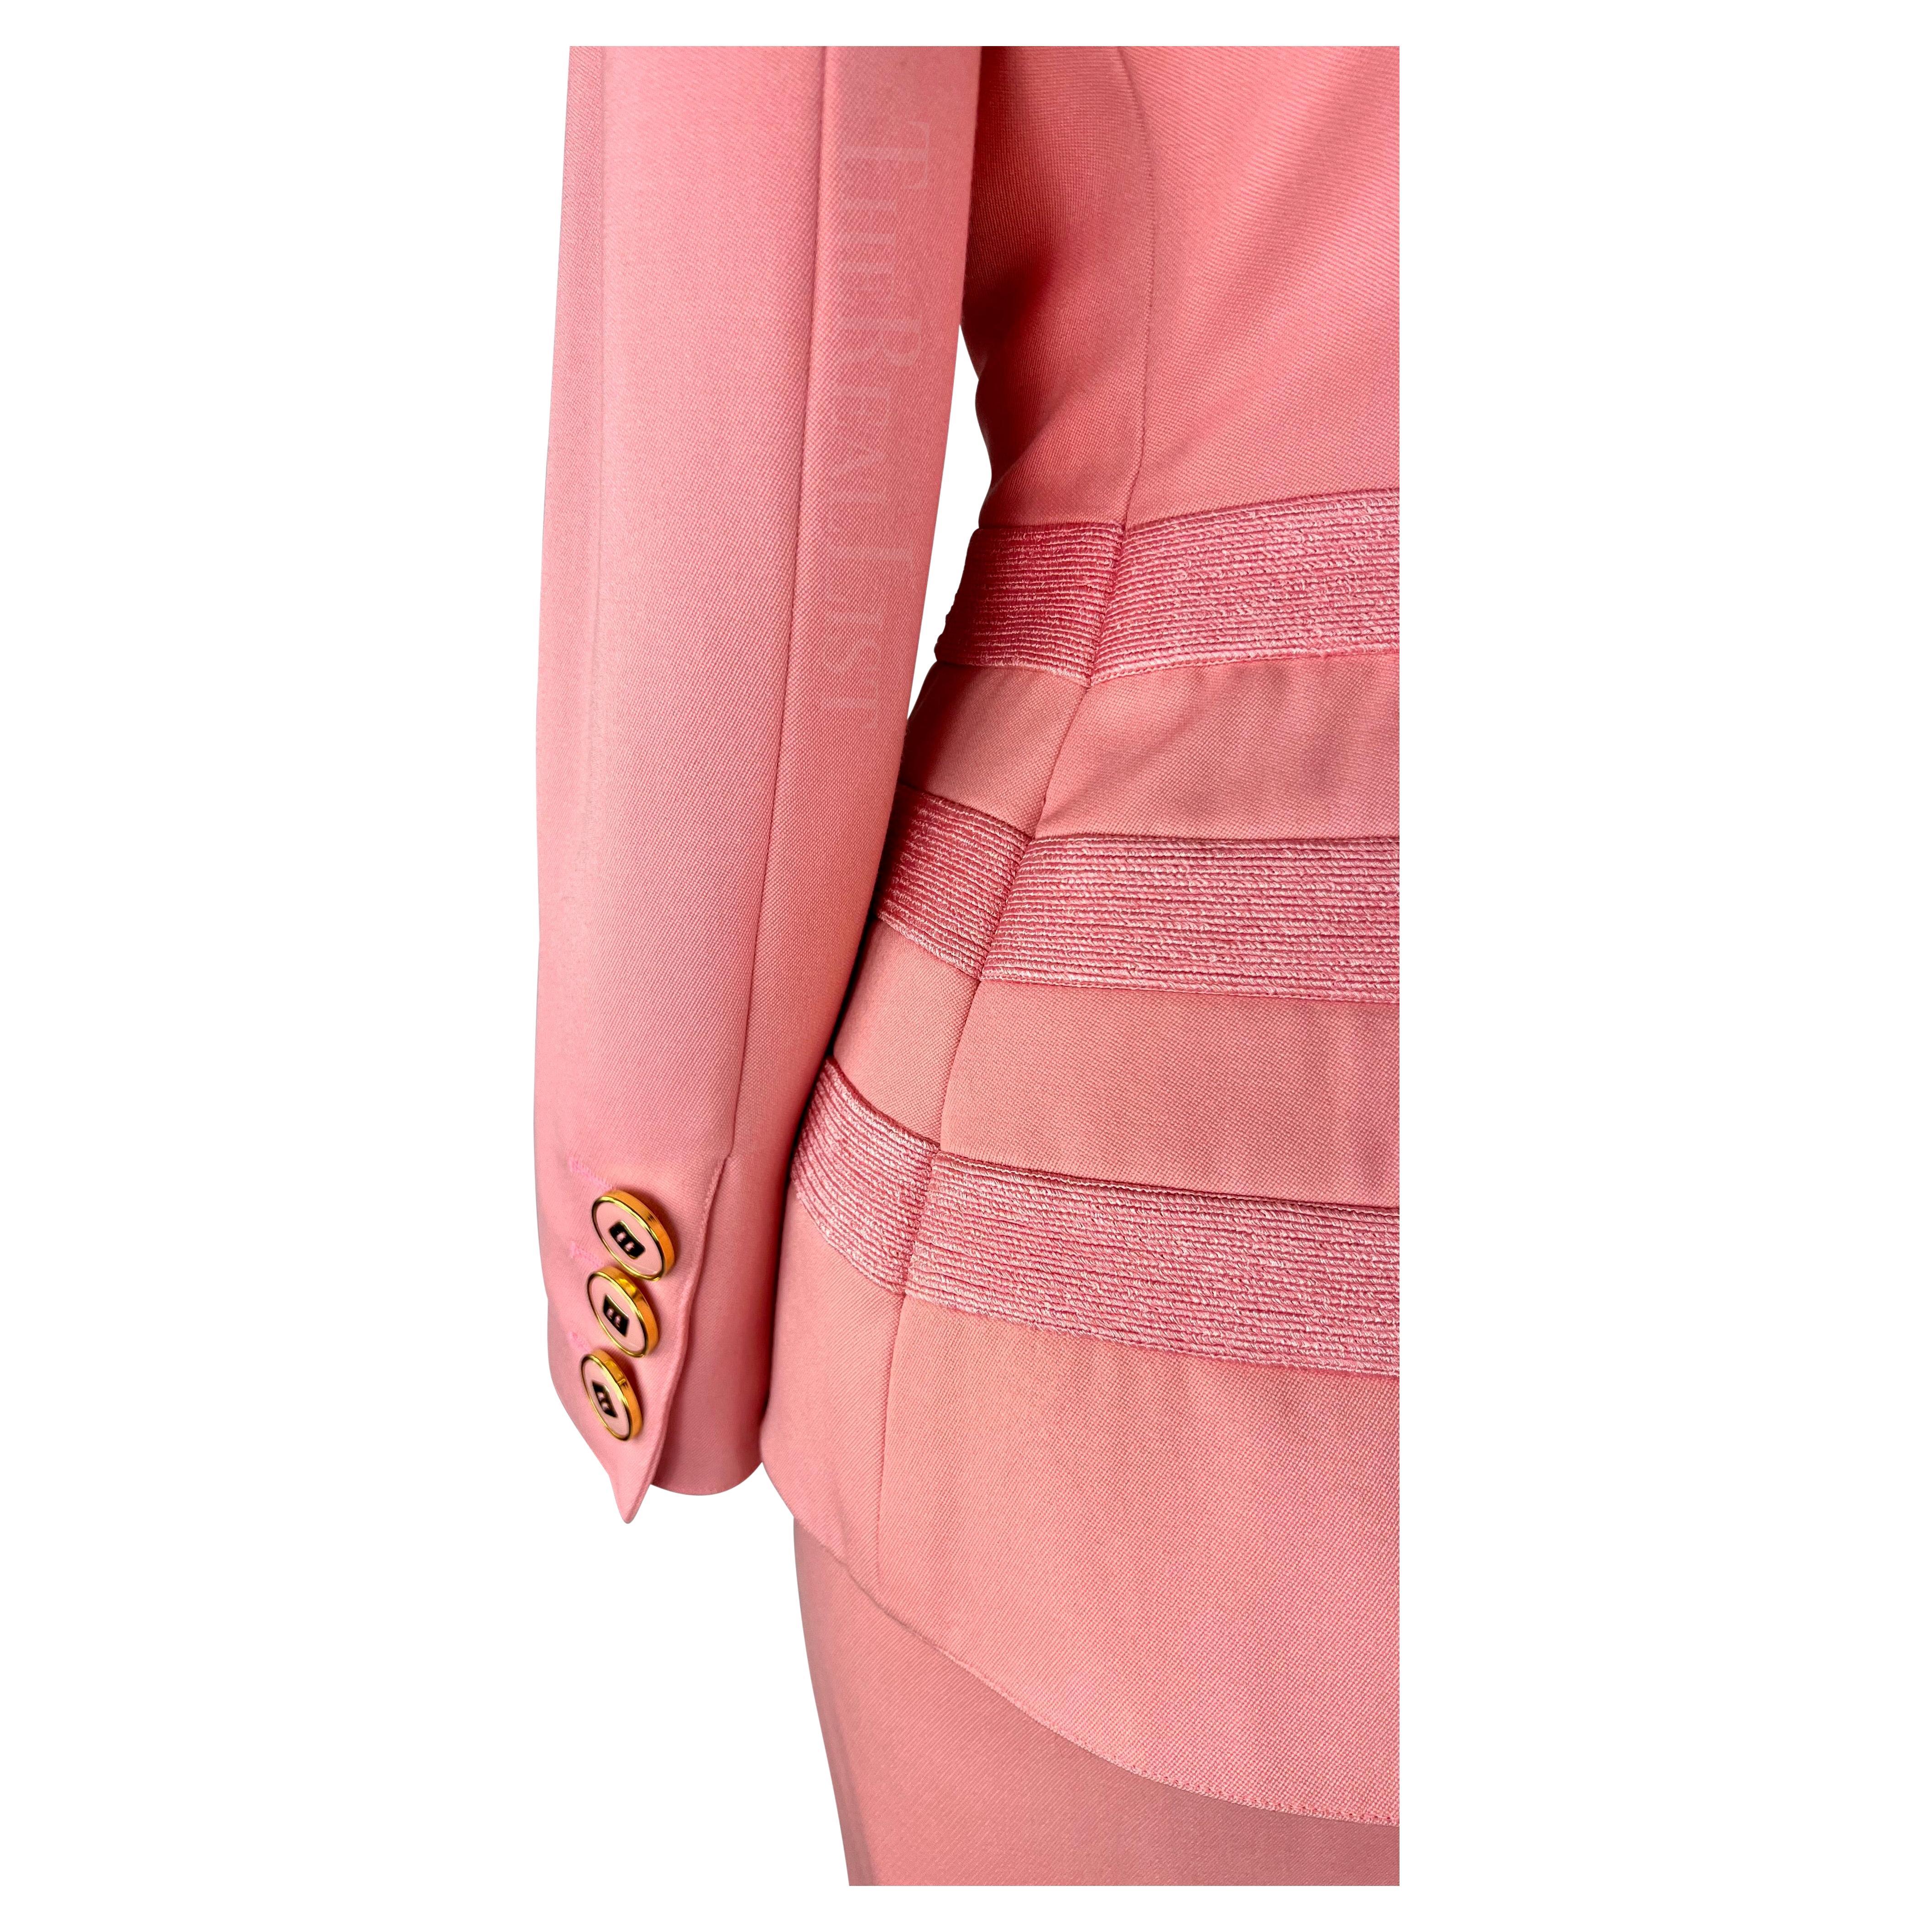 S/S 1993 Valentino Garavani Runway Embroidered Geometric Light Pink Skirt Suit For Sale 1